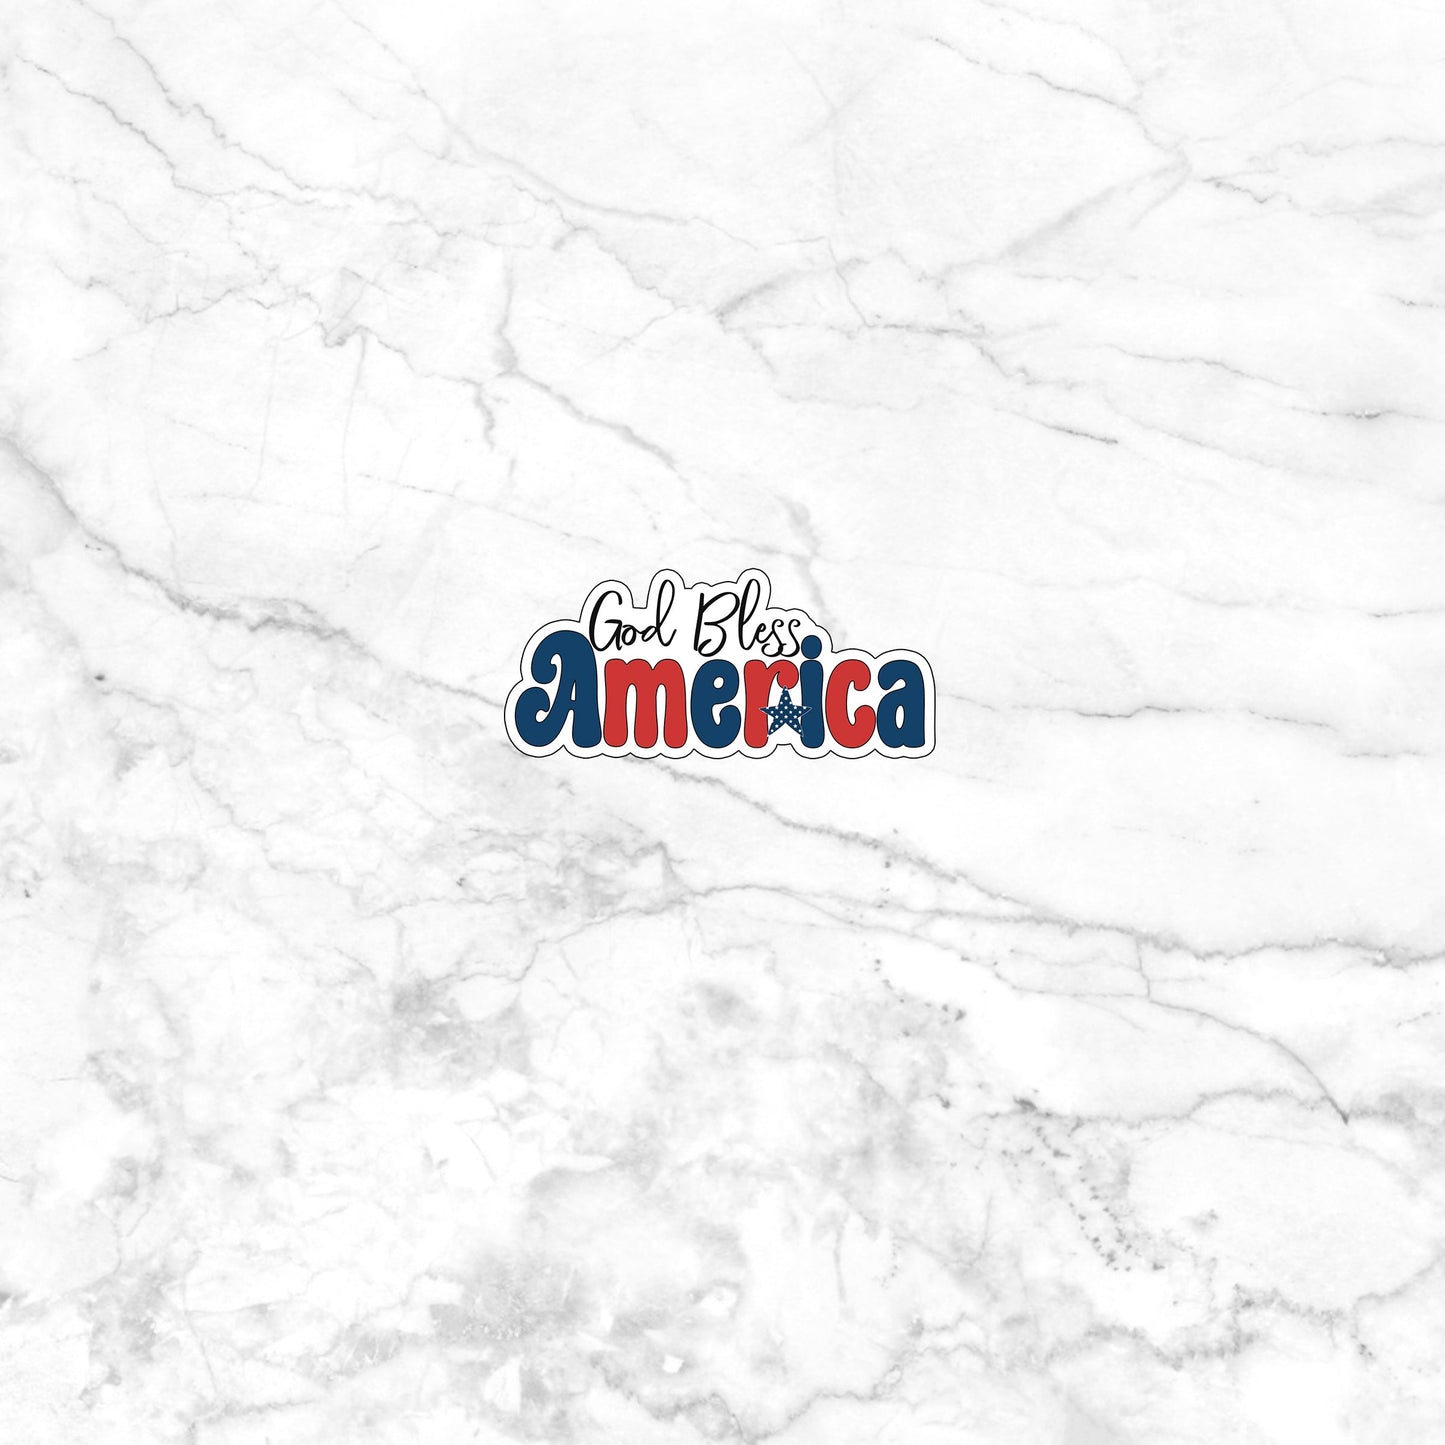 bless-america-sticker